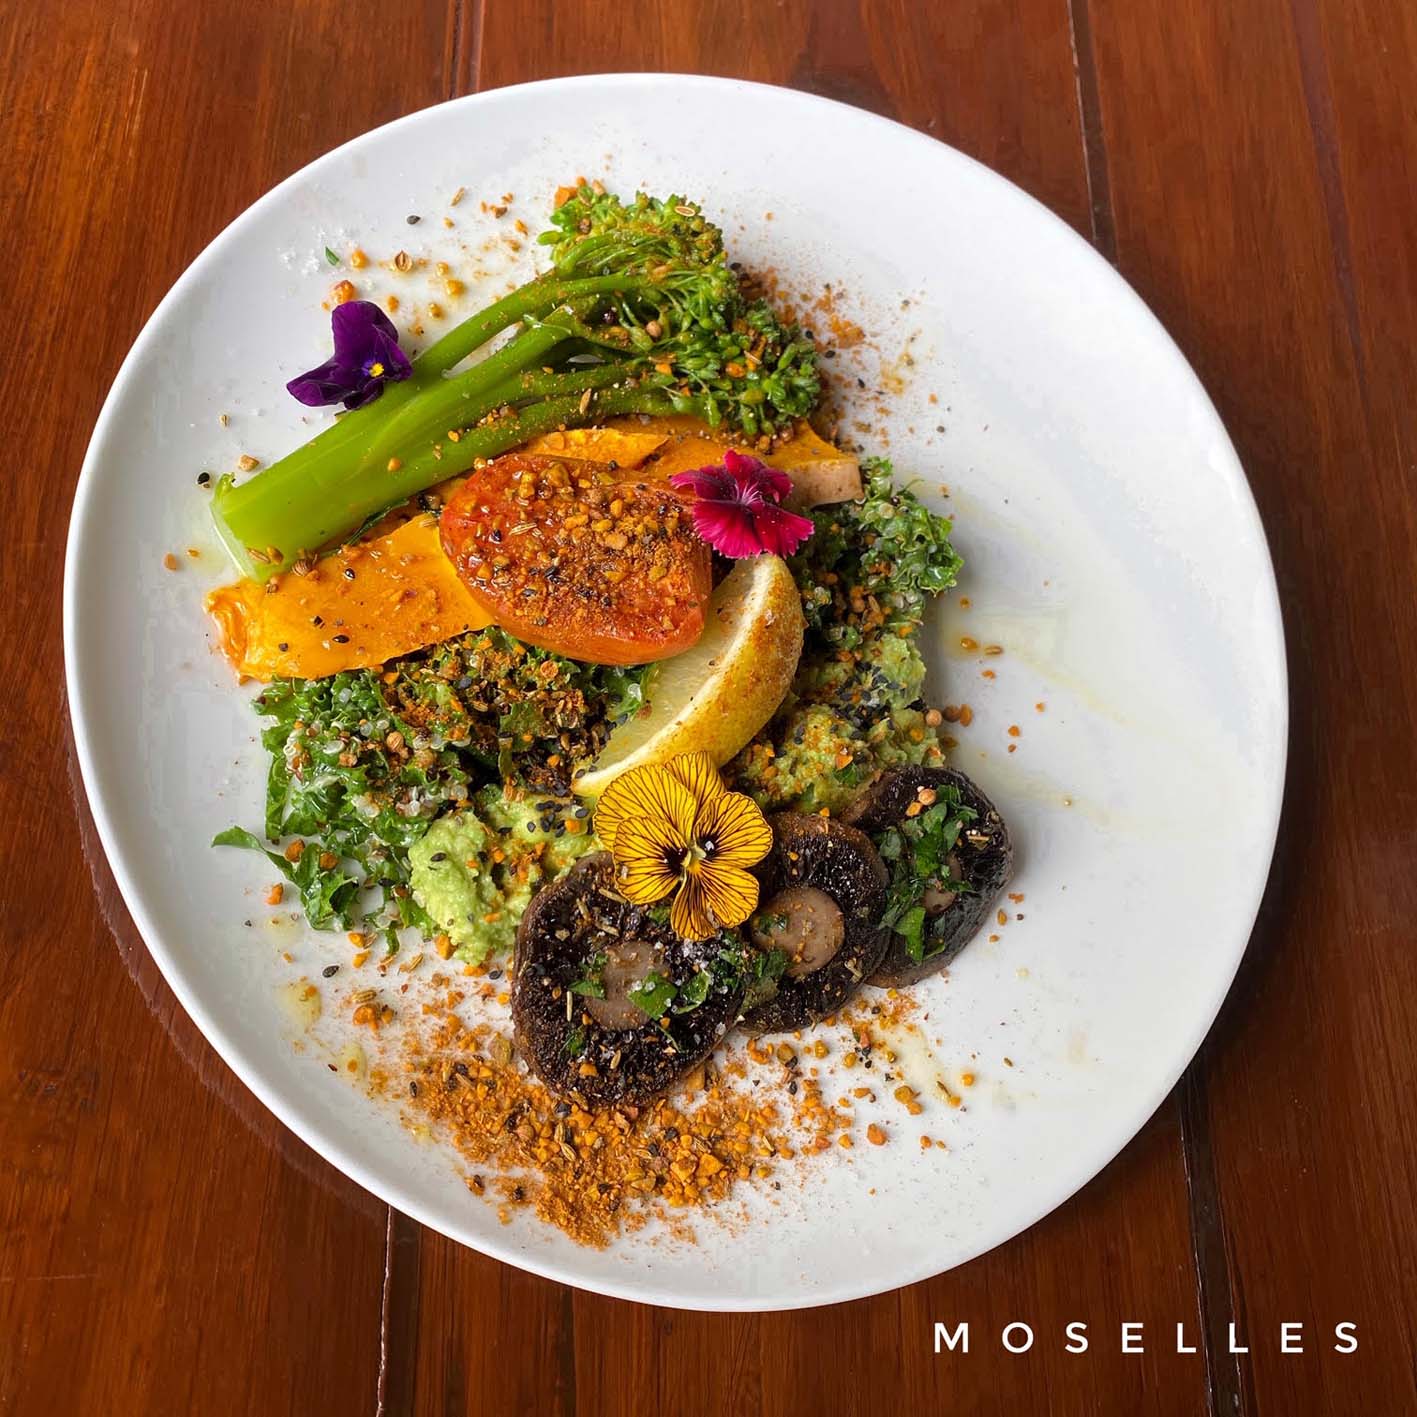 Moselles vegan dish